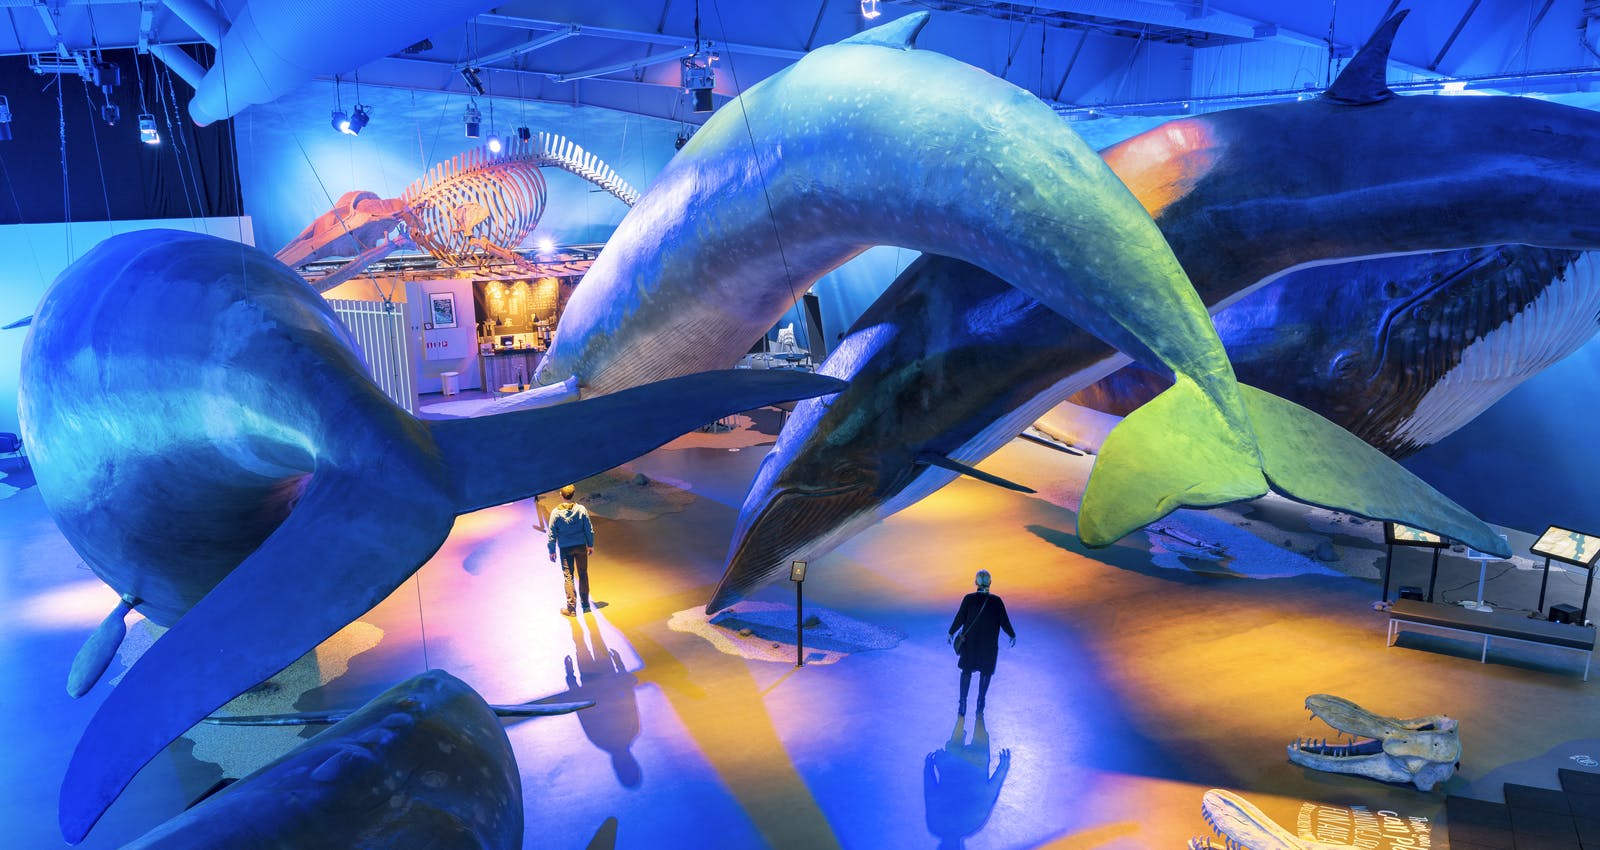 Whales of Iceland exhibition in Reykjavík